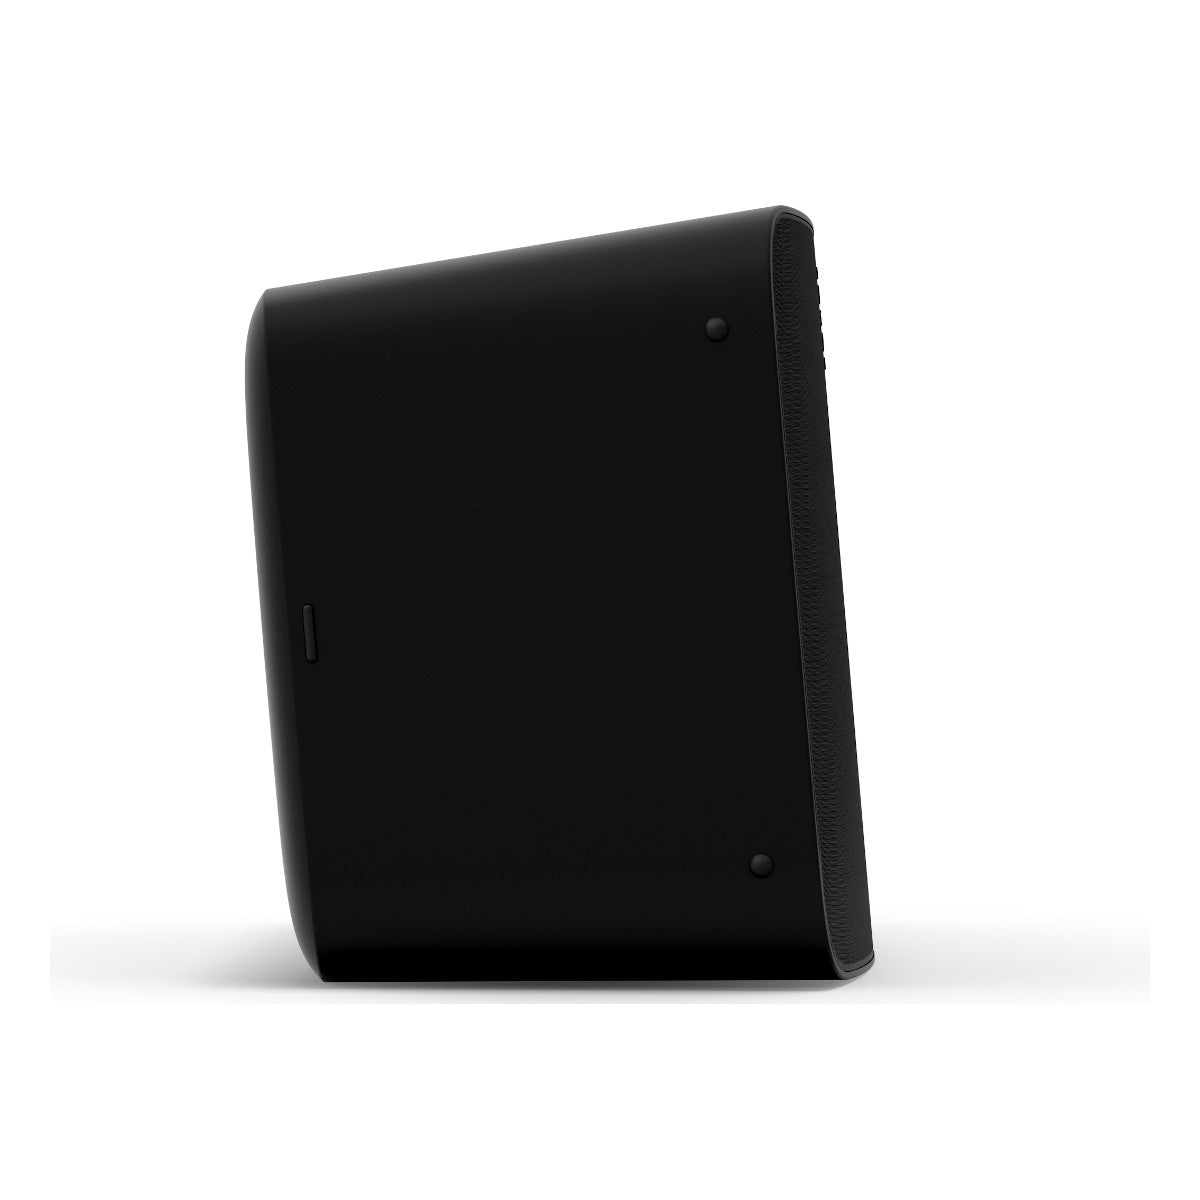 Sonos Five Wireless Speaker for Streaming Music with Sanus Wireless Speaker Stand - Pair (Black)